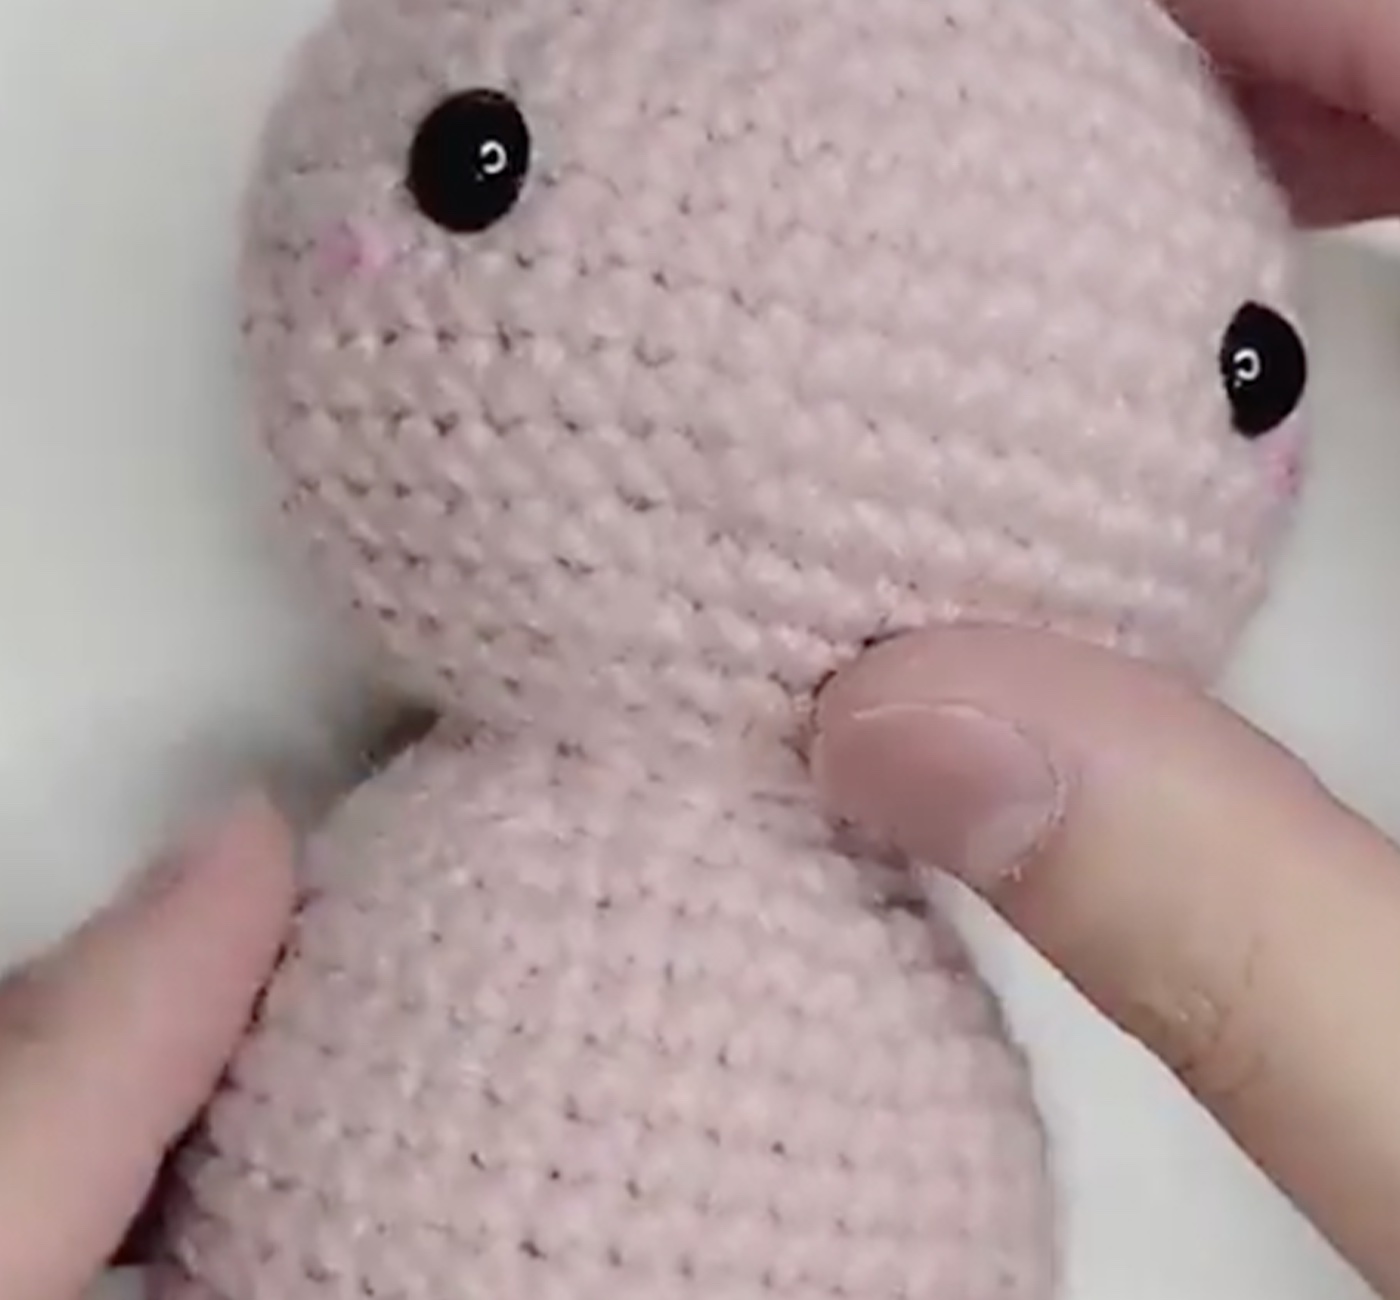 Light pink crochet amigurumi body with 2 black eyes on head.